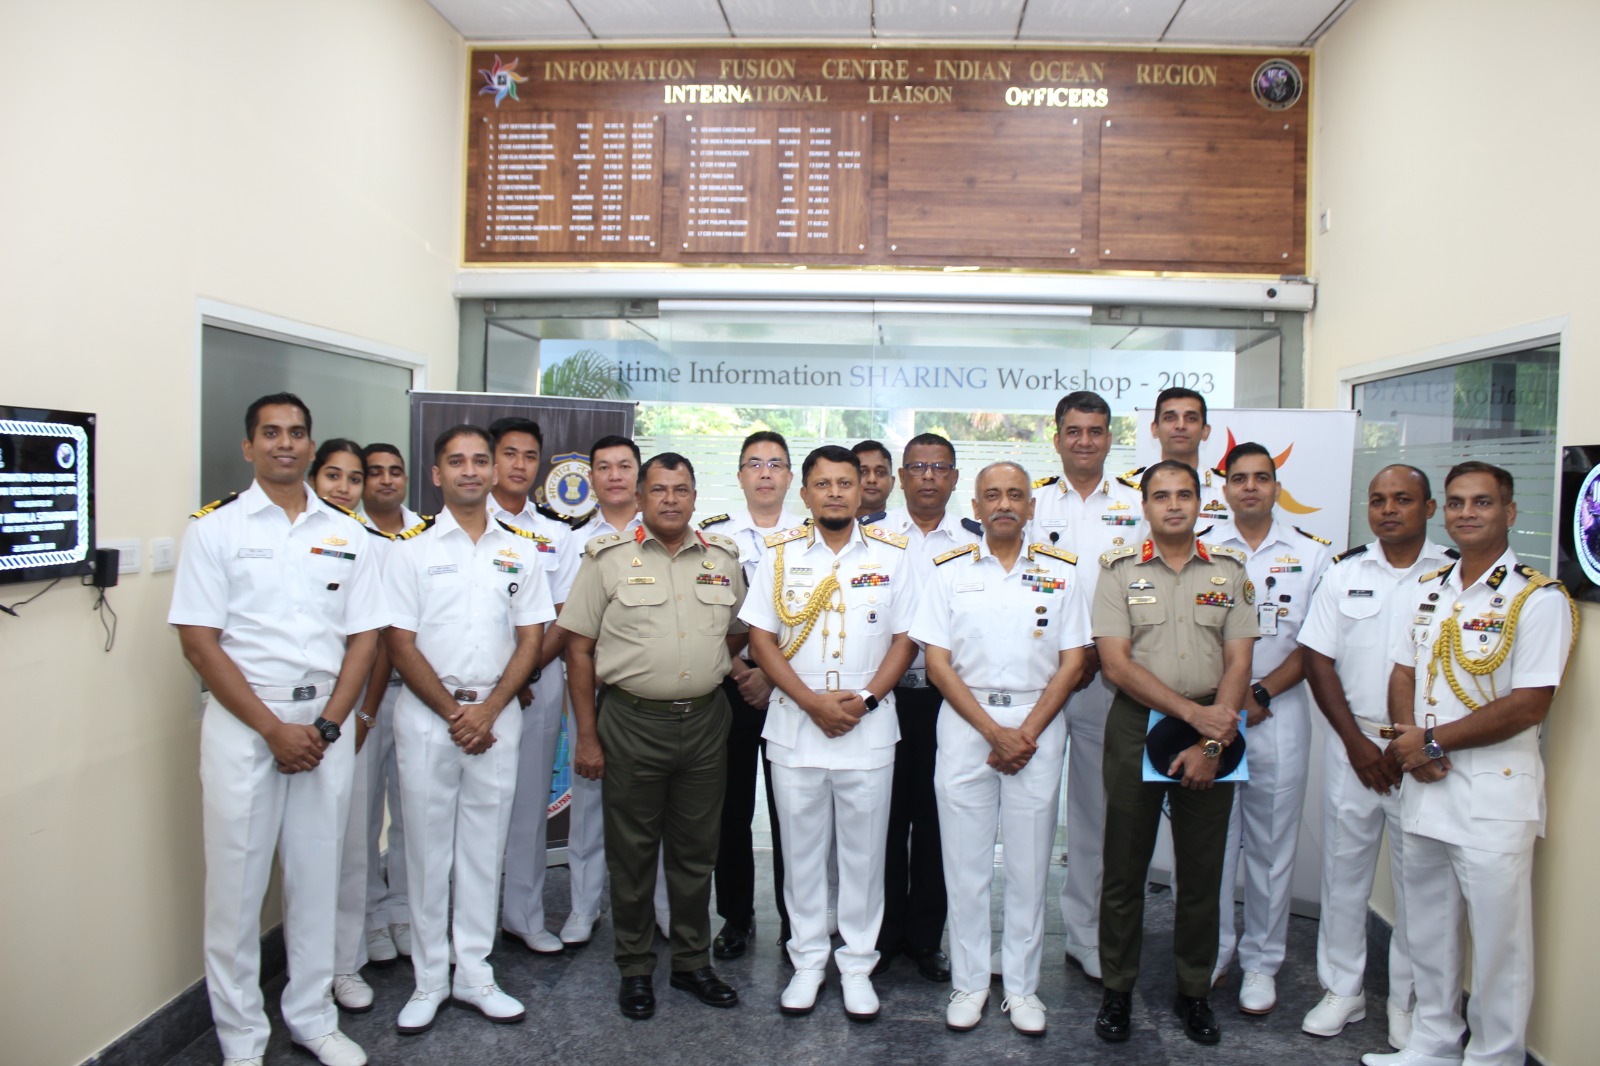 Visit of Chief of Naval Staff, Bangladesh Navy at IFC-IOR - 13 Sep 23